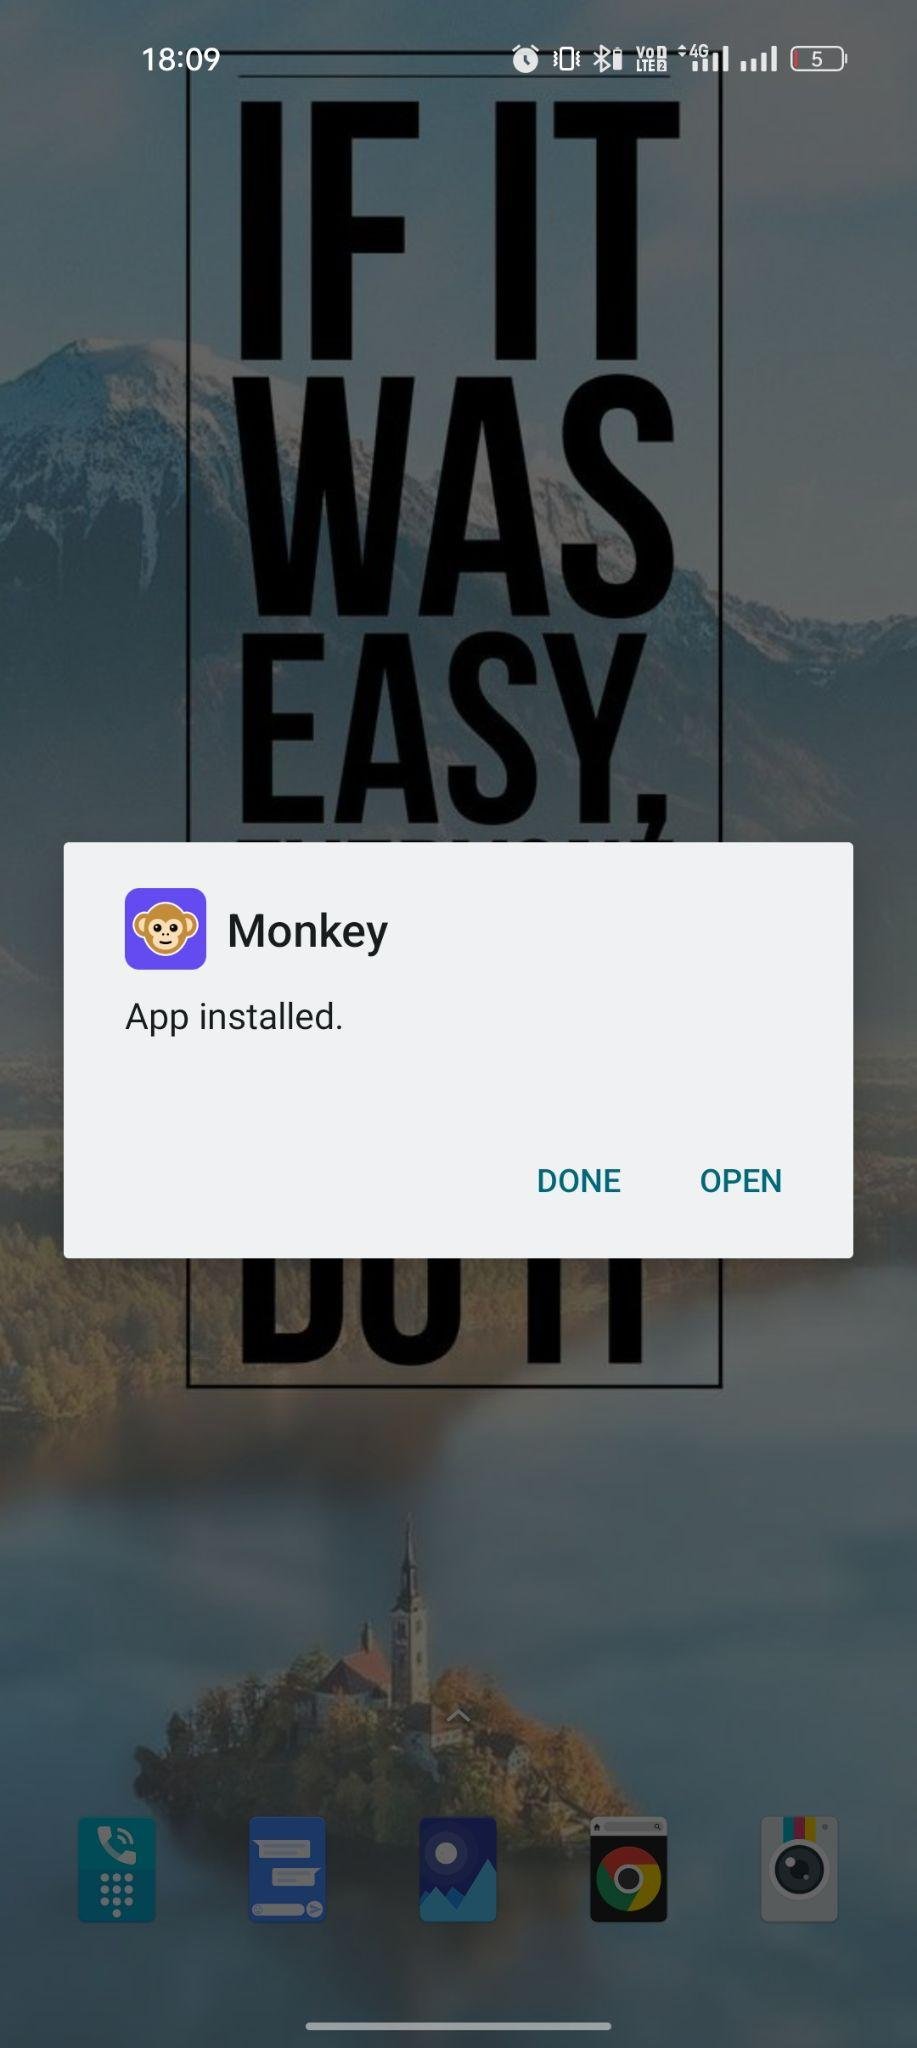 Monkey apk installed